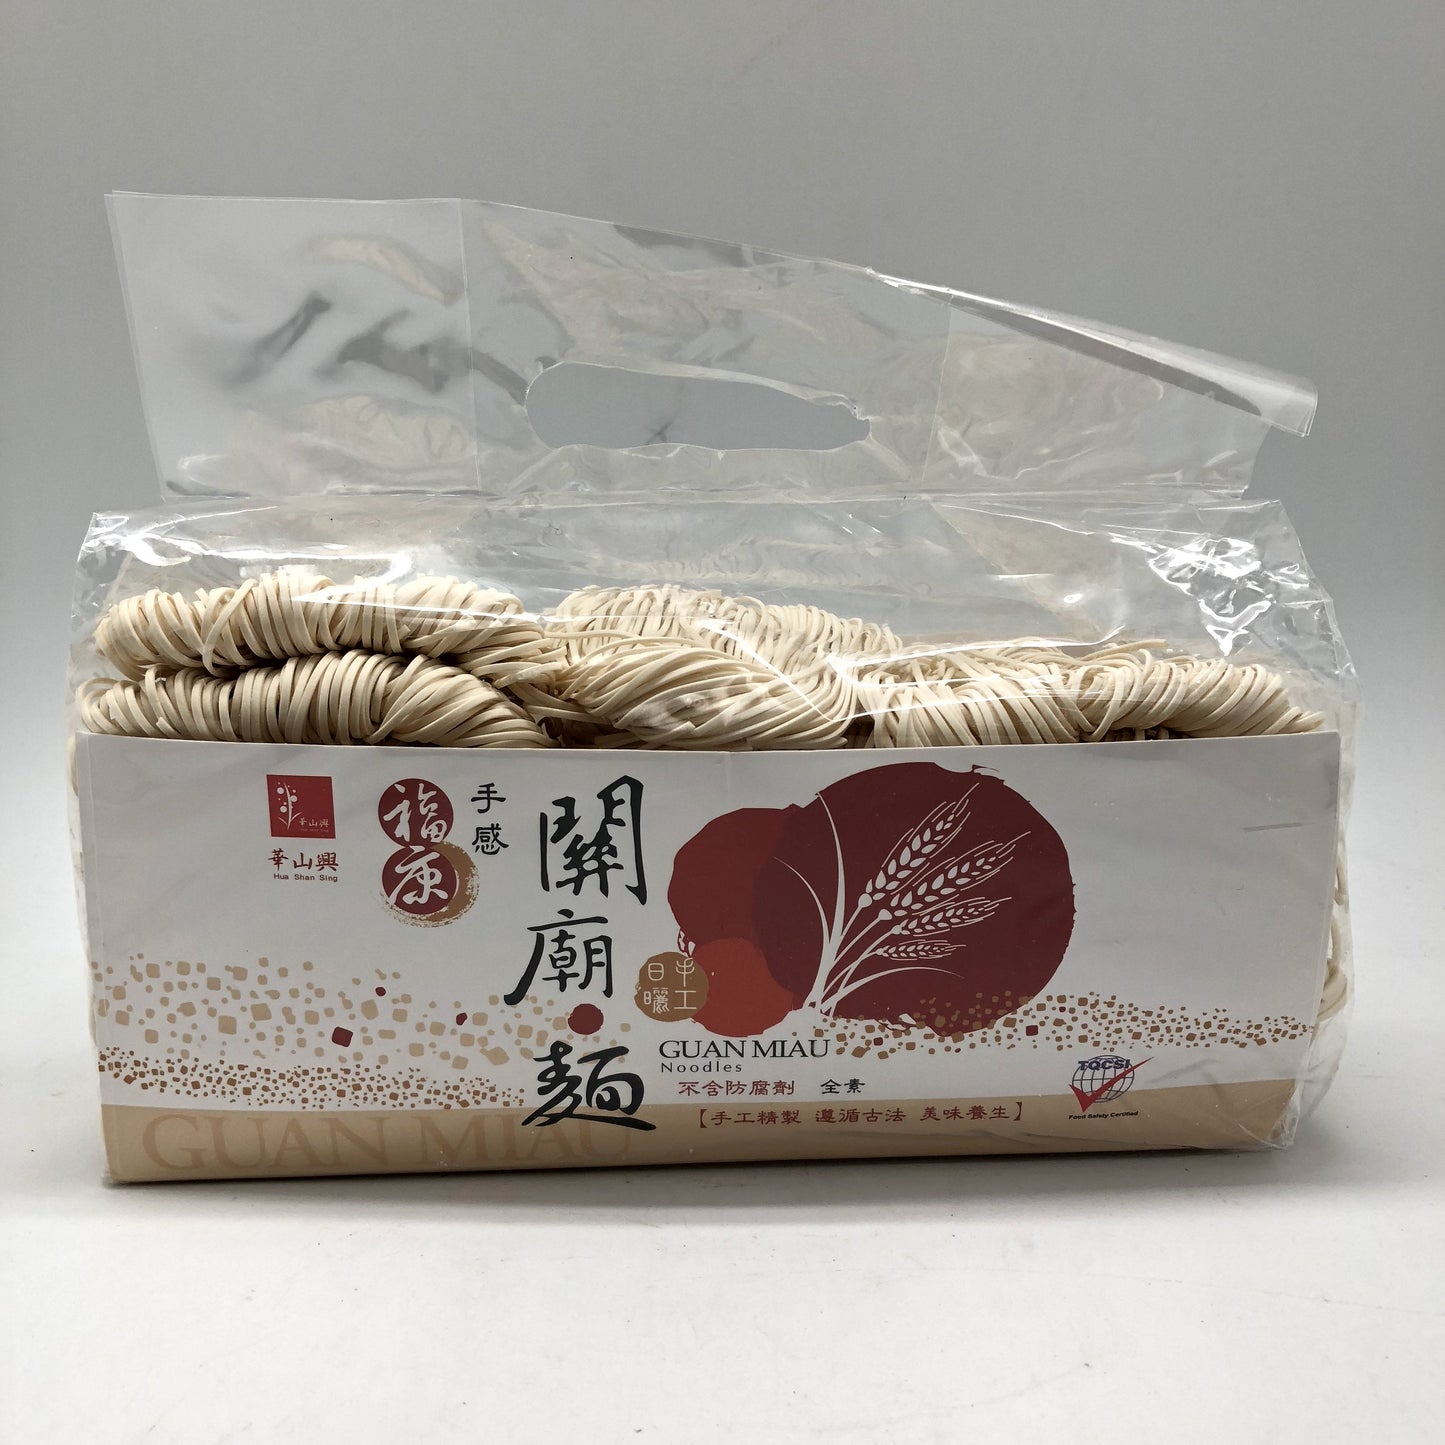 N014TS Hua Shan Sing Brand - Guan Miau Dried Noodles (small) 1.2kg - 12 bags / 1CTN - New Eastland Pty Ltd - Asian food wholesalers